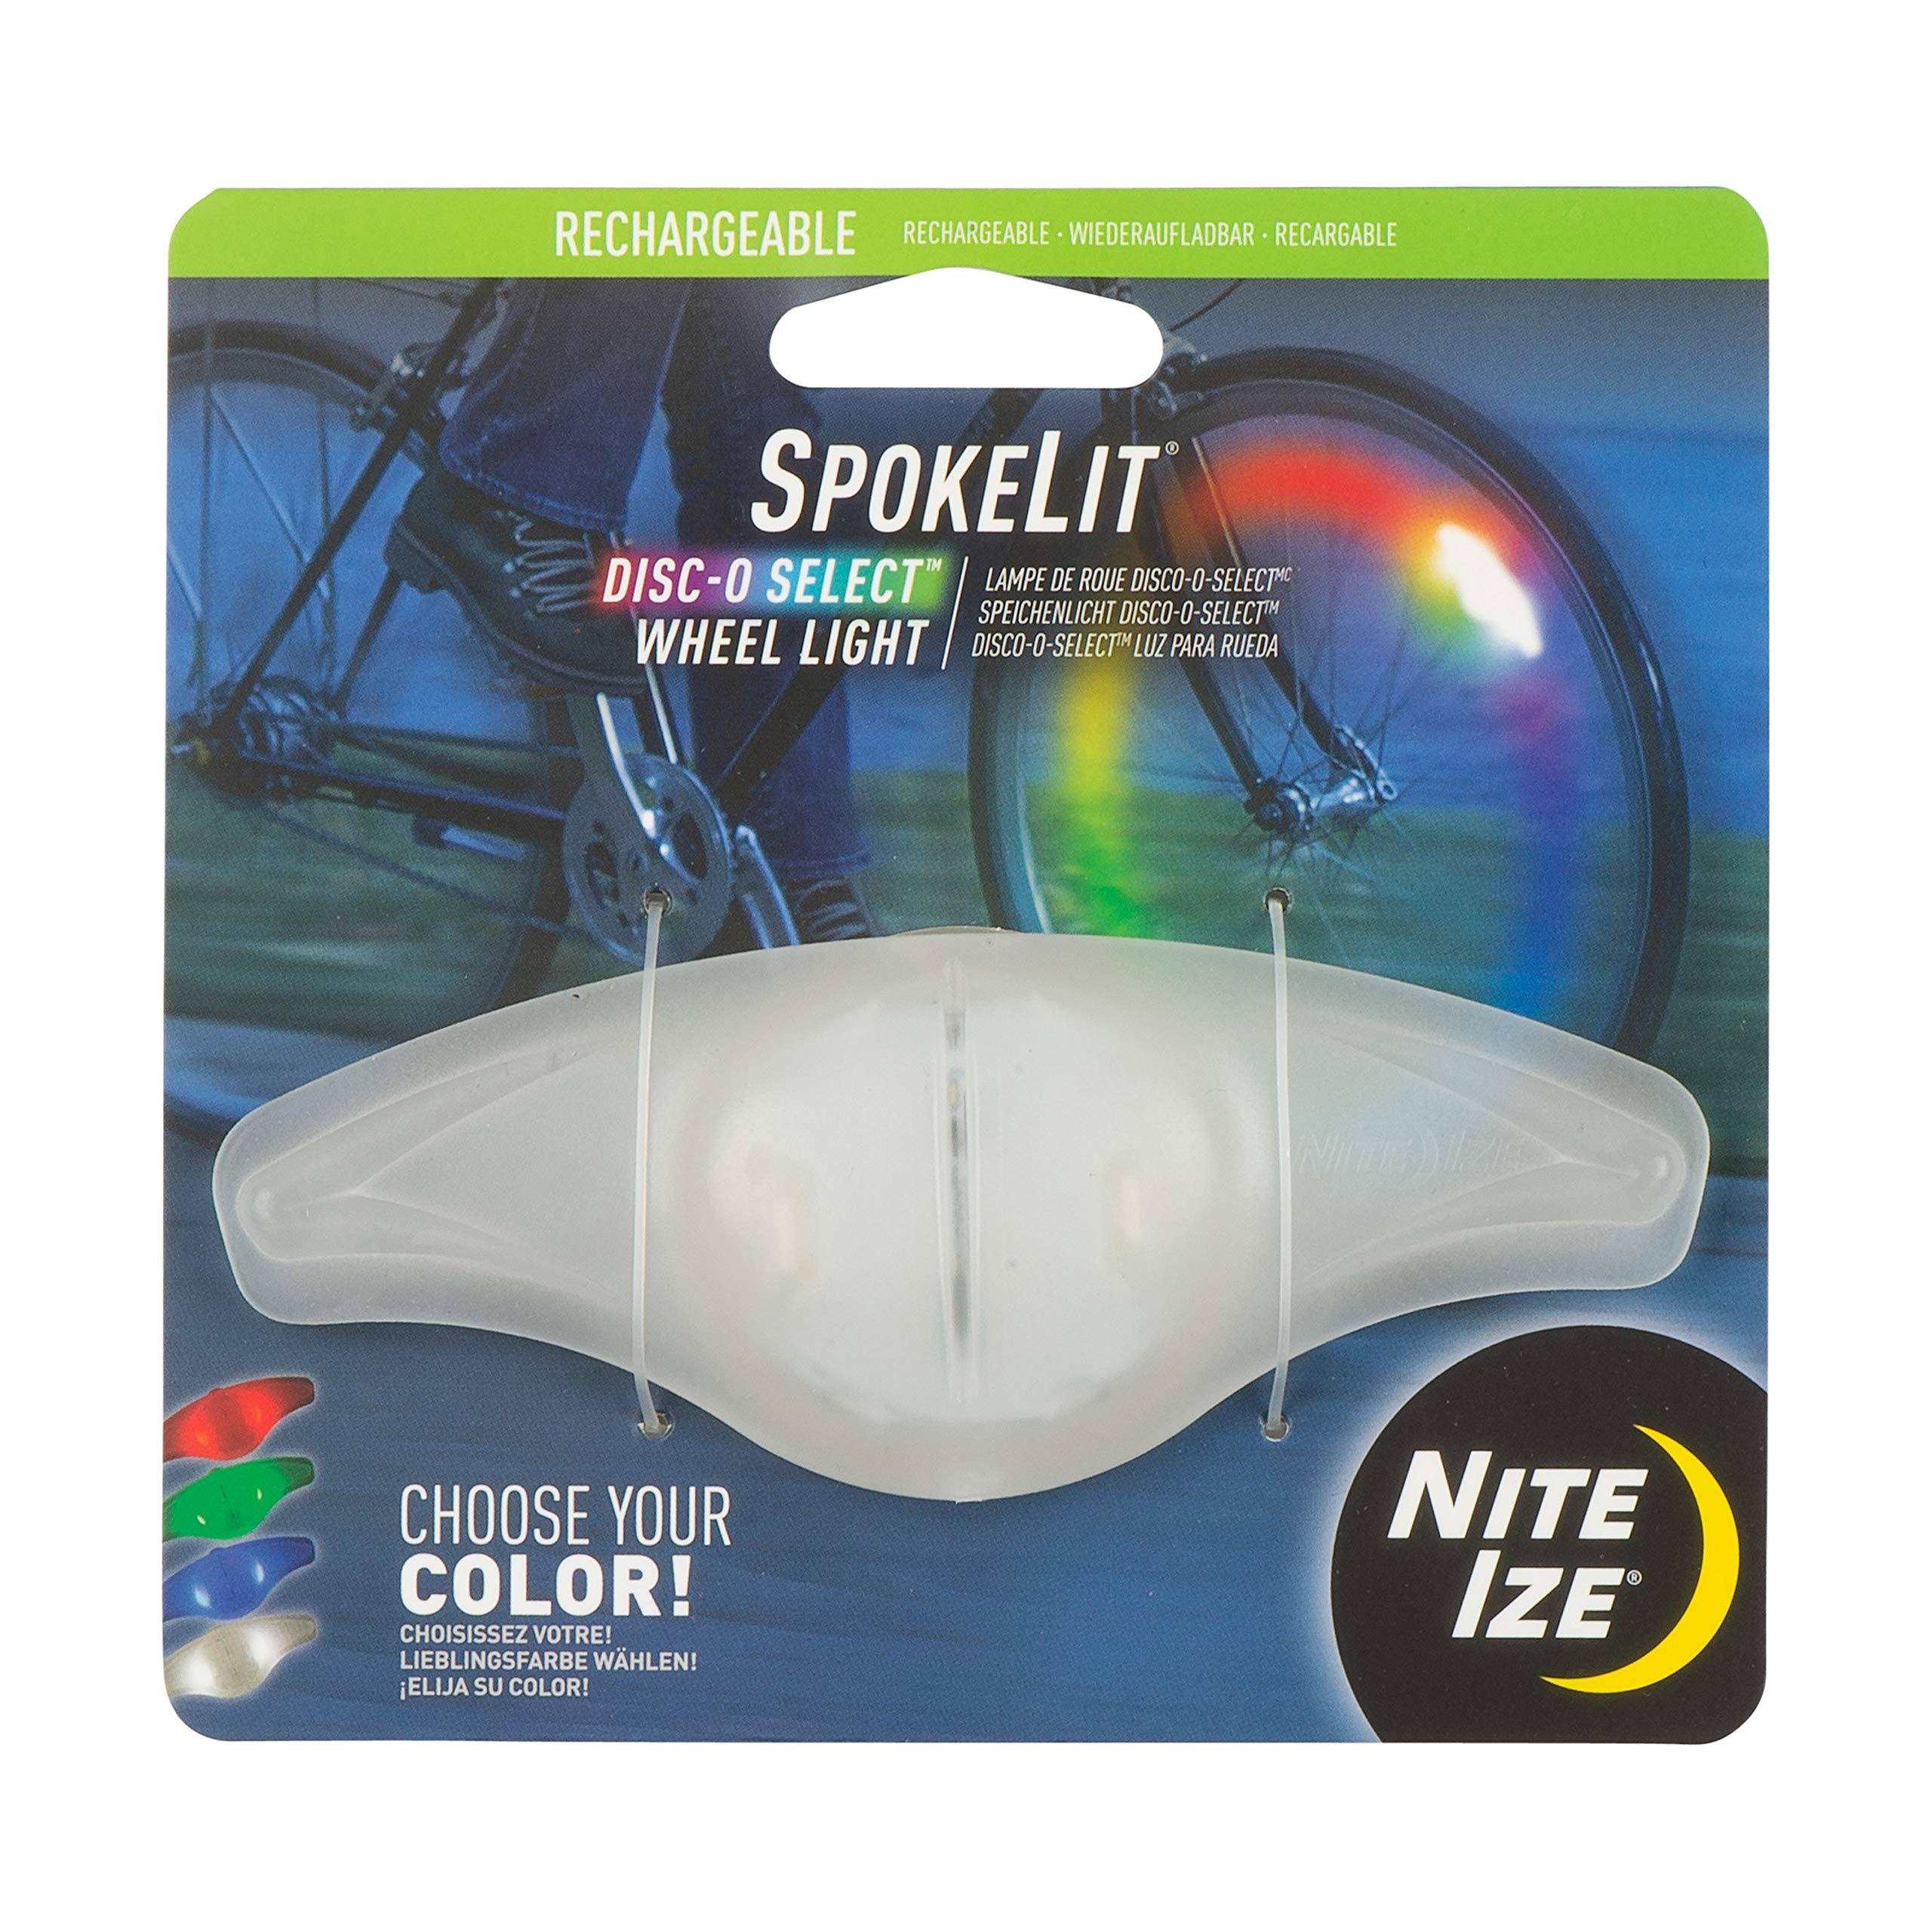 Nite-Ize SpokeLit LED Wheel Light - Disc-O Select Rechargeable